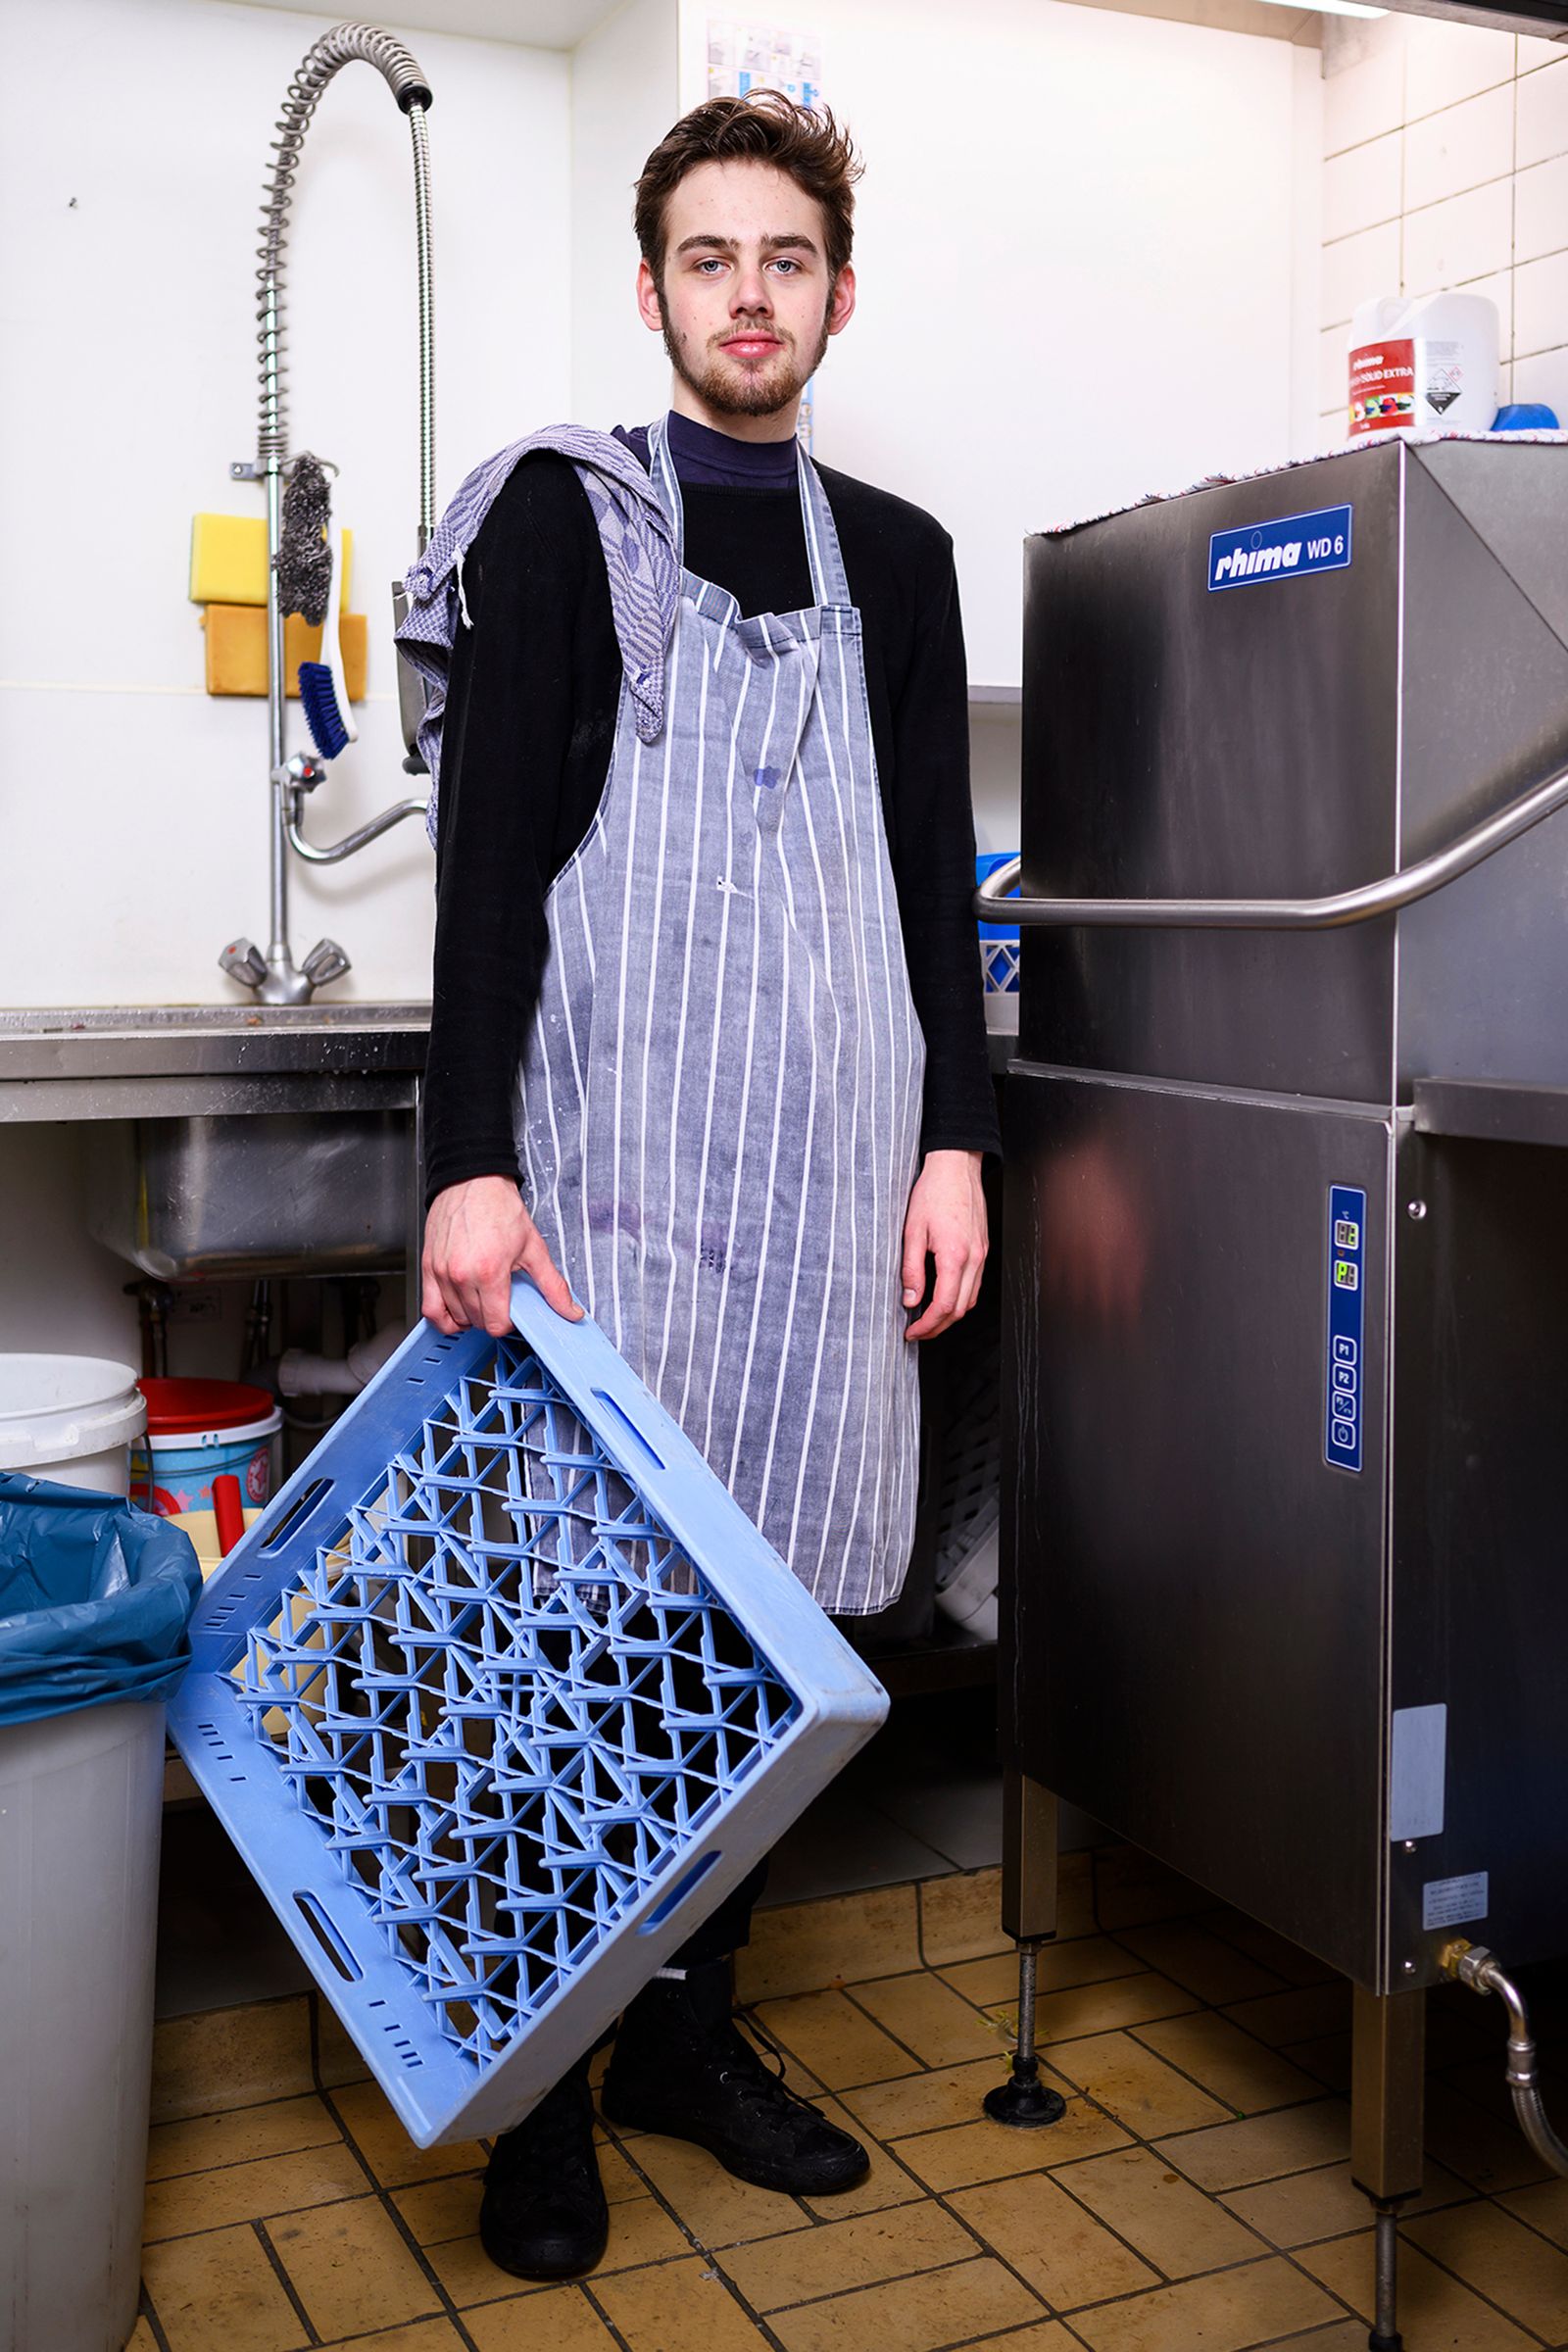 © Els Zweerink - Sammie works as a dishwasher in the restaurant.